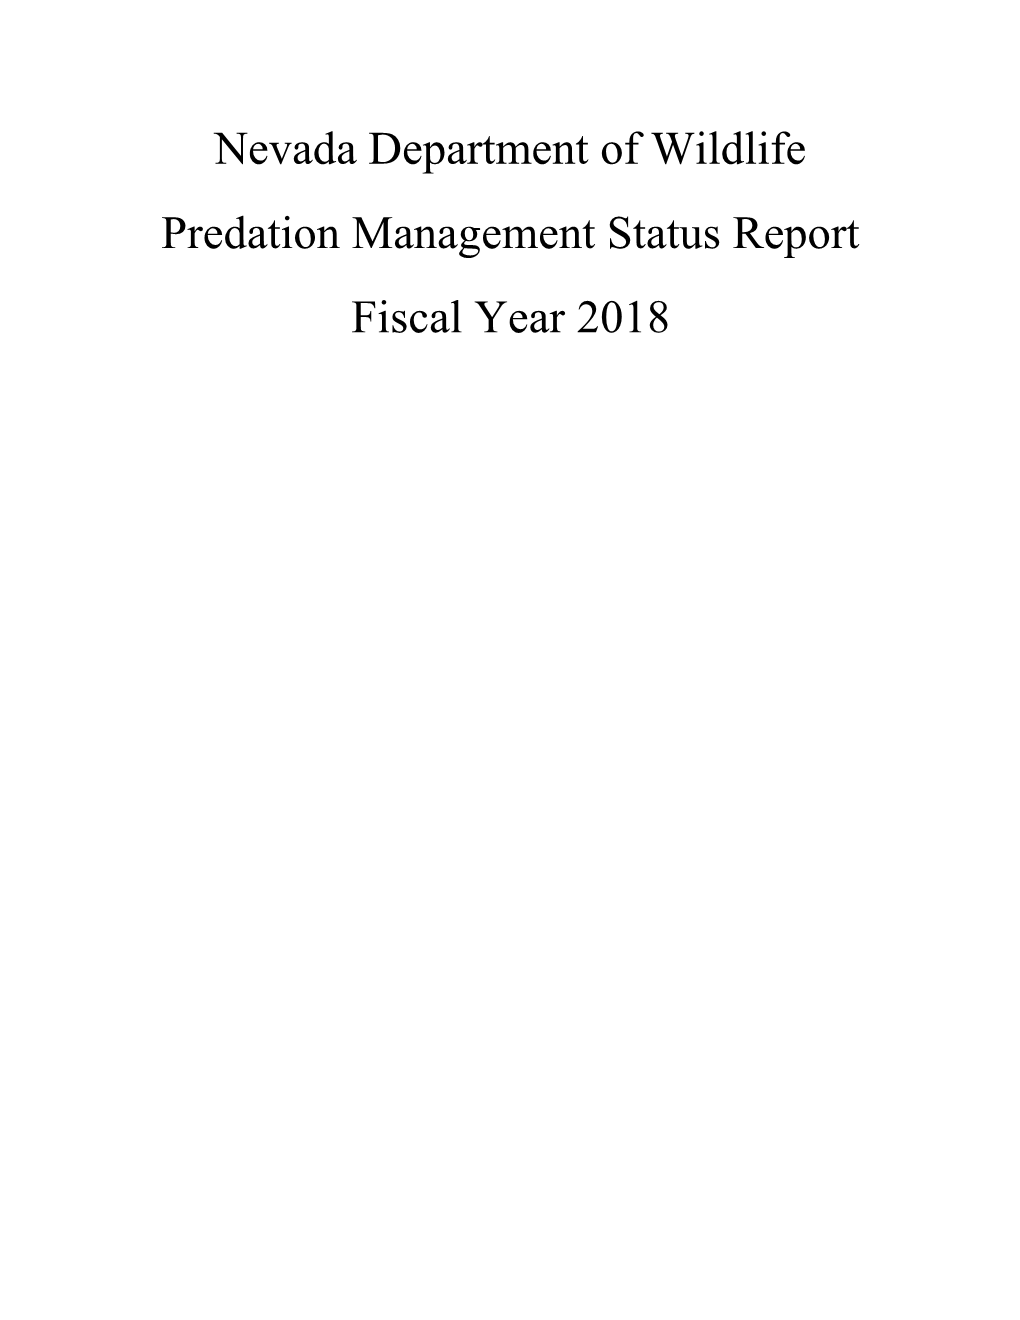 Nevada Department of Wildlife Predation Management Status Report Fiscal Year 2018